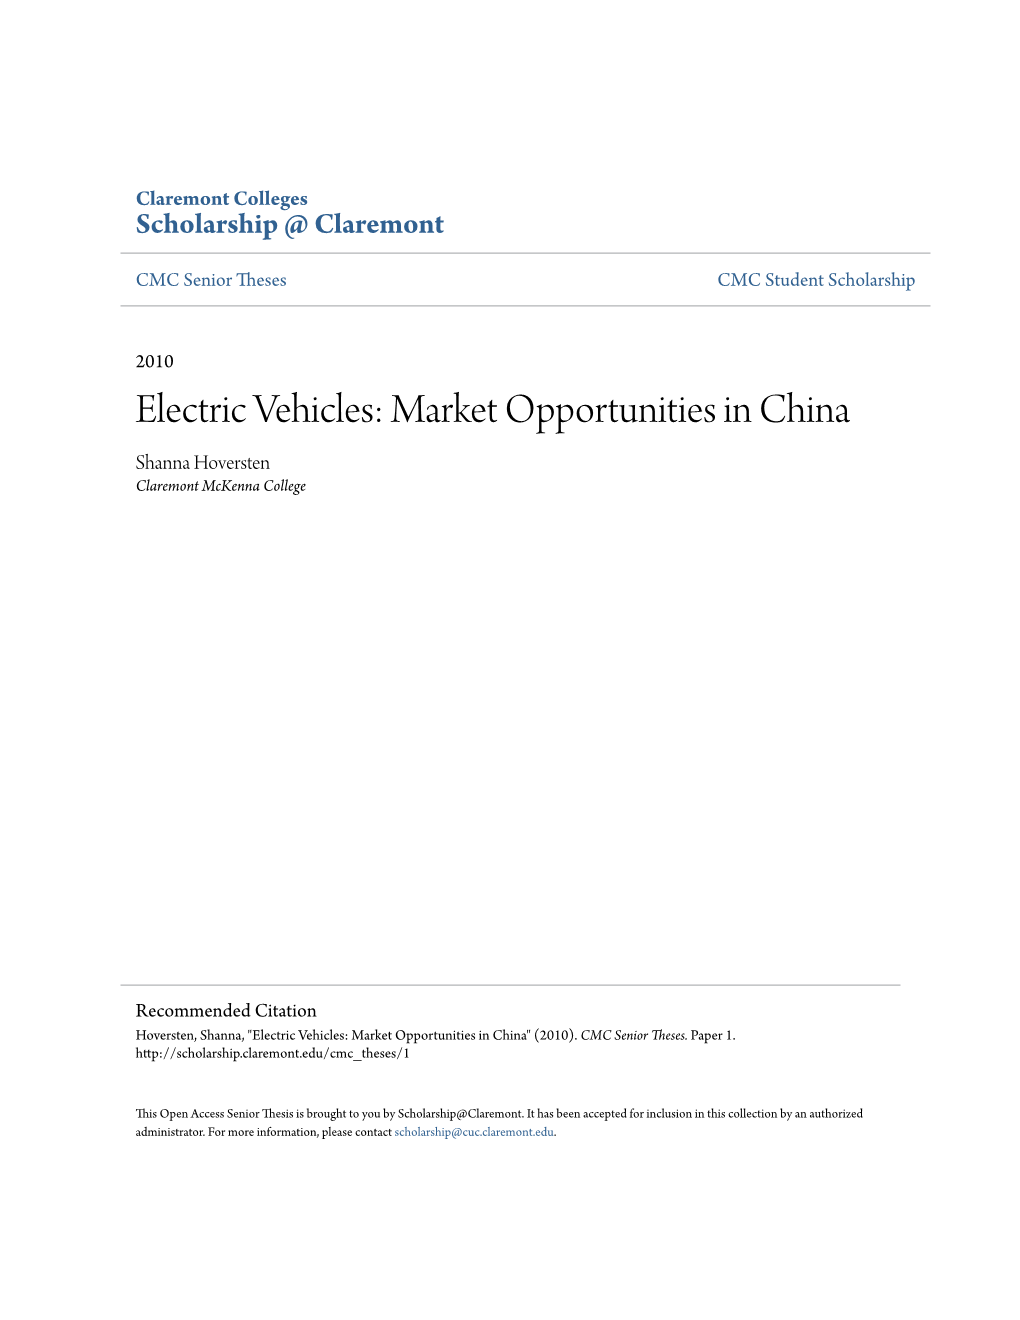 Electric Vehicles: Market Opportunities in China Shanna Hoversten Claremont Mckenna College